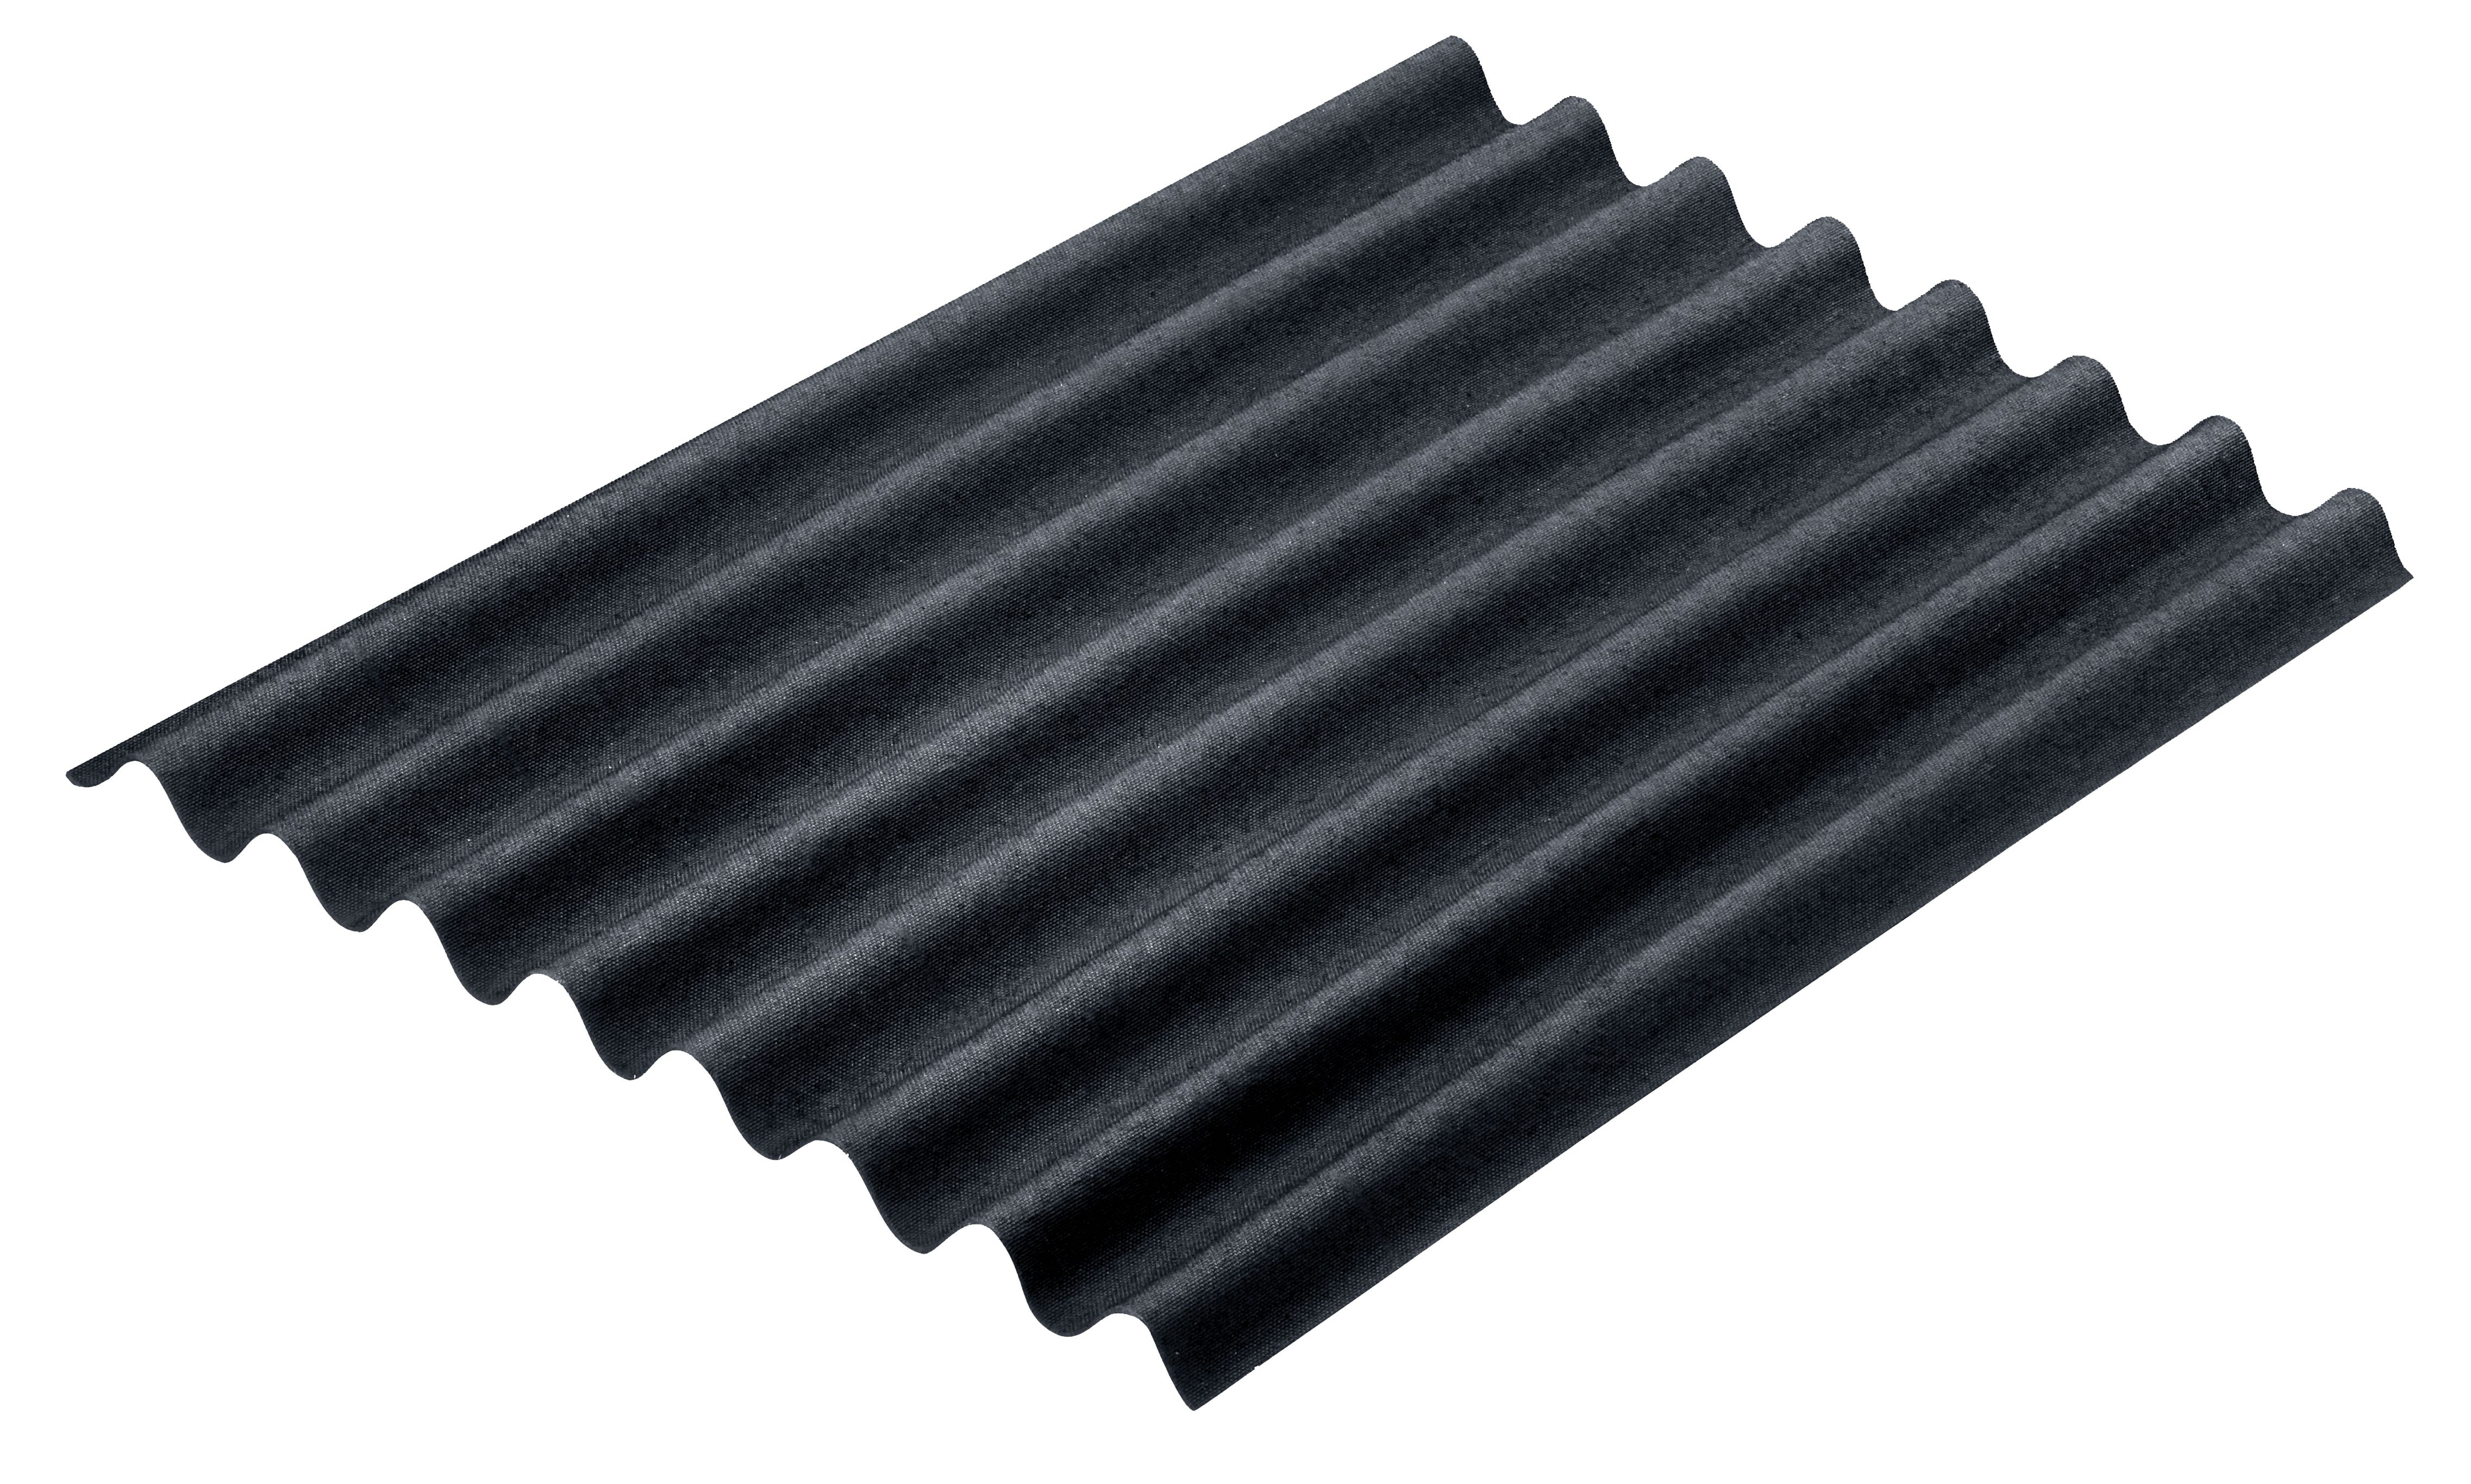 Image of Onduline Easyline Intense Black Bitumen Corrugated Roof Sheet - 760mm x 1000mm x 2.6mm